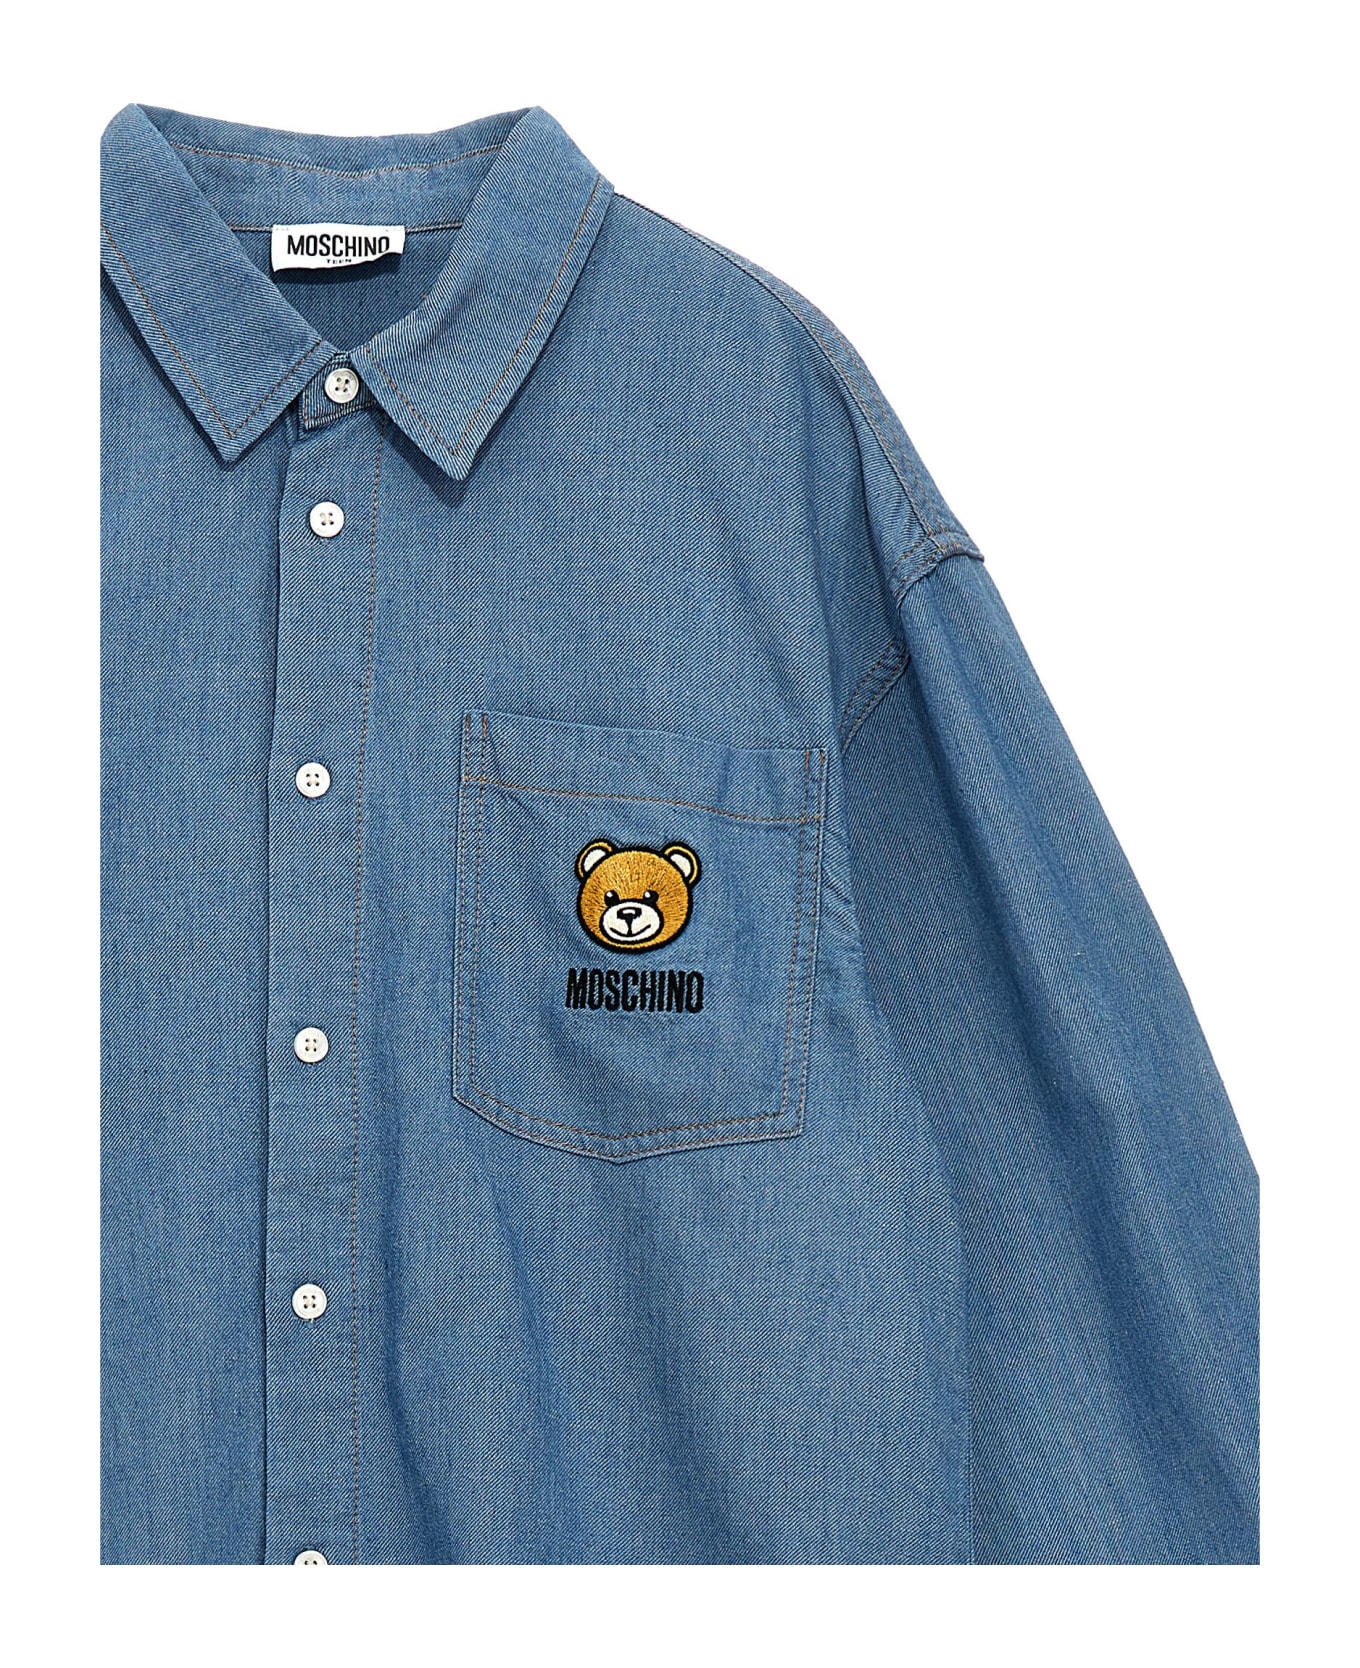 Moschino Logo Embroidery Shirt - Light Blue シャツ